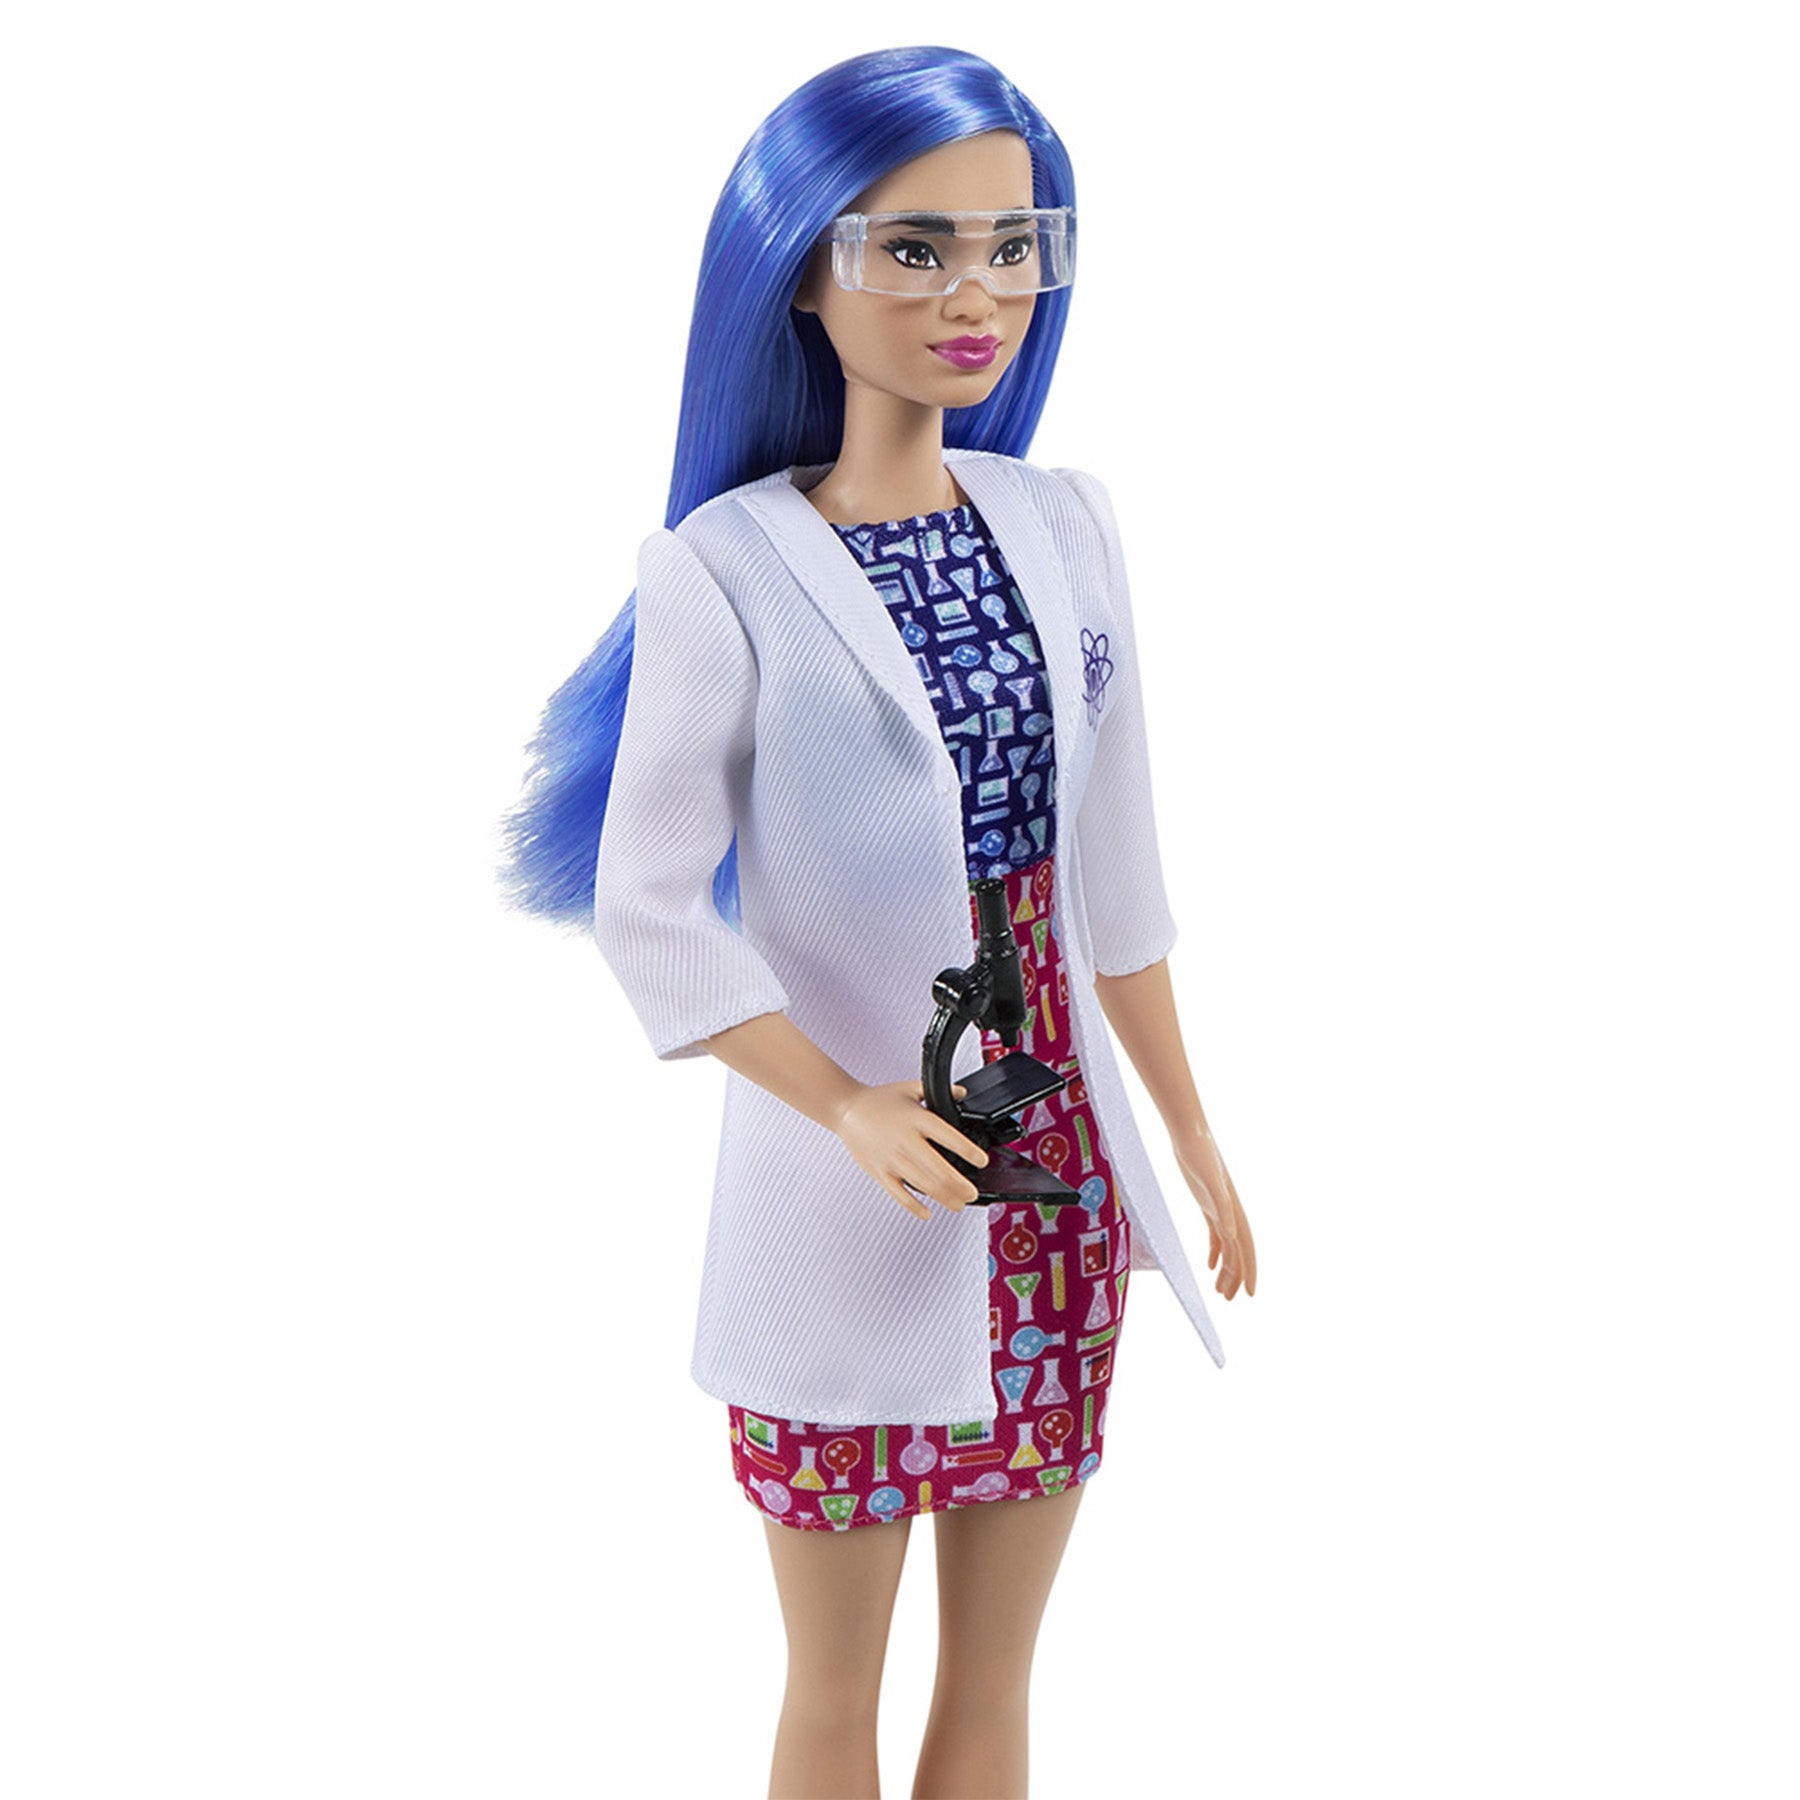 Barbie Scientist